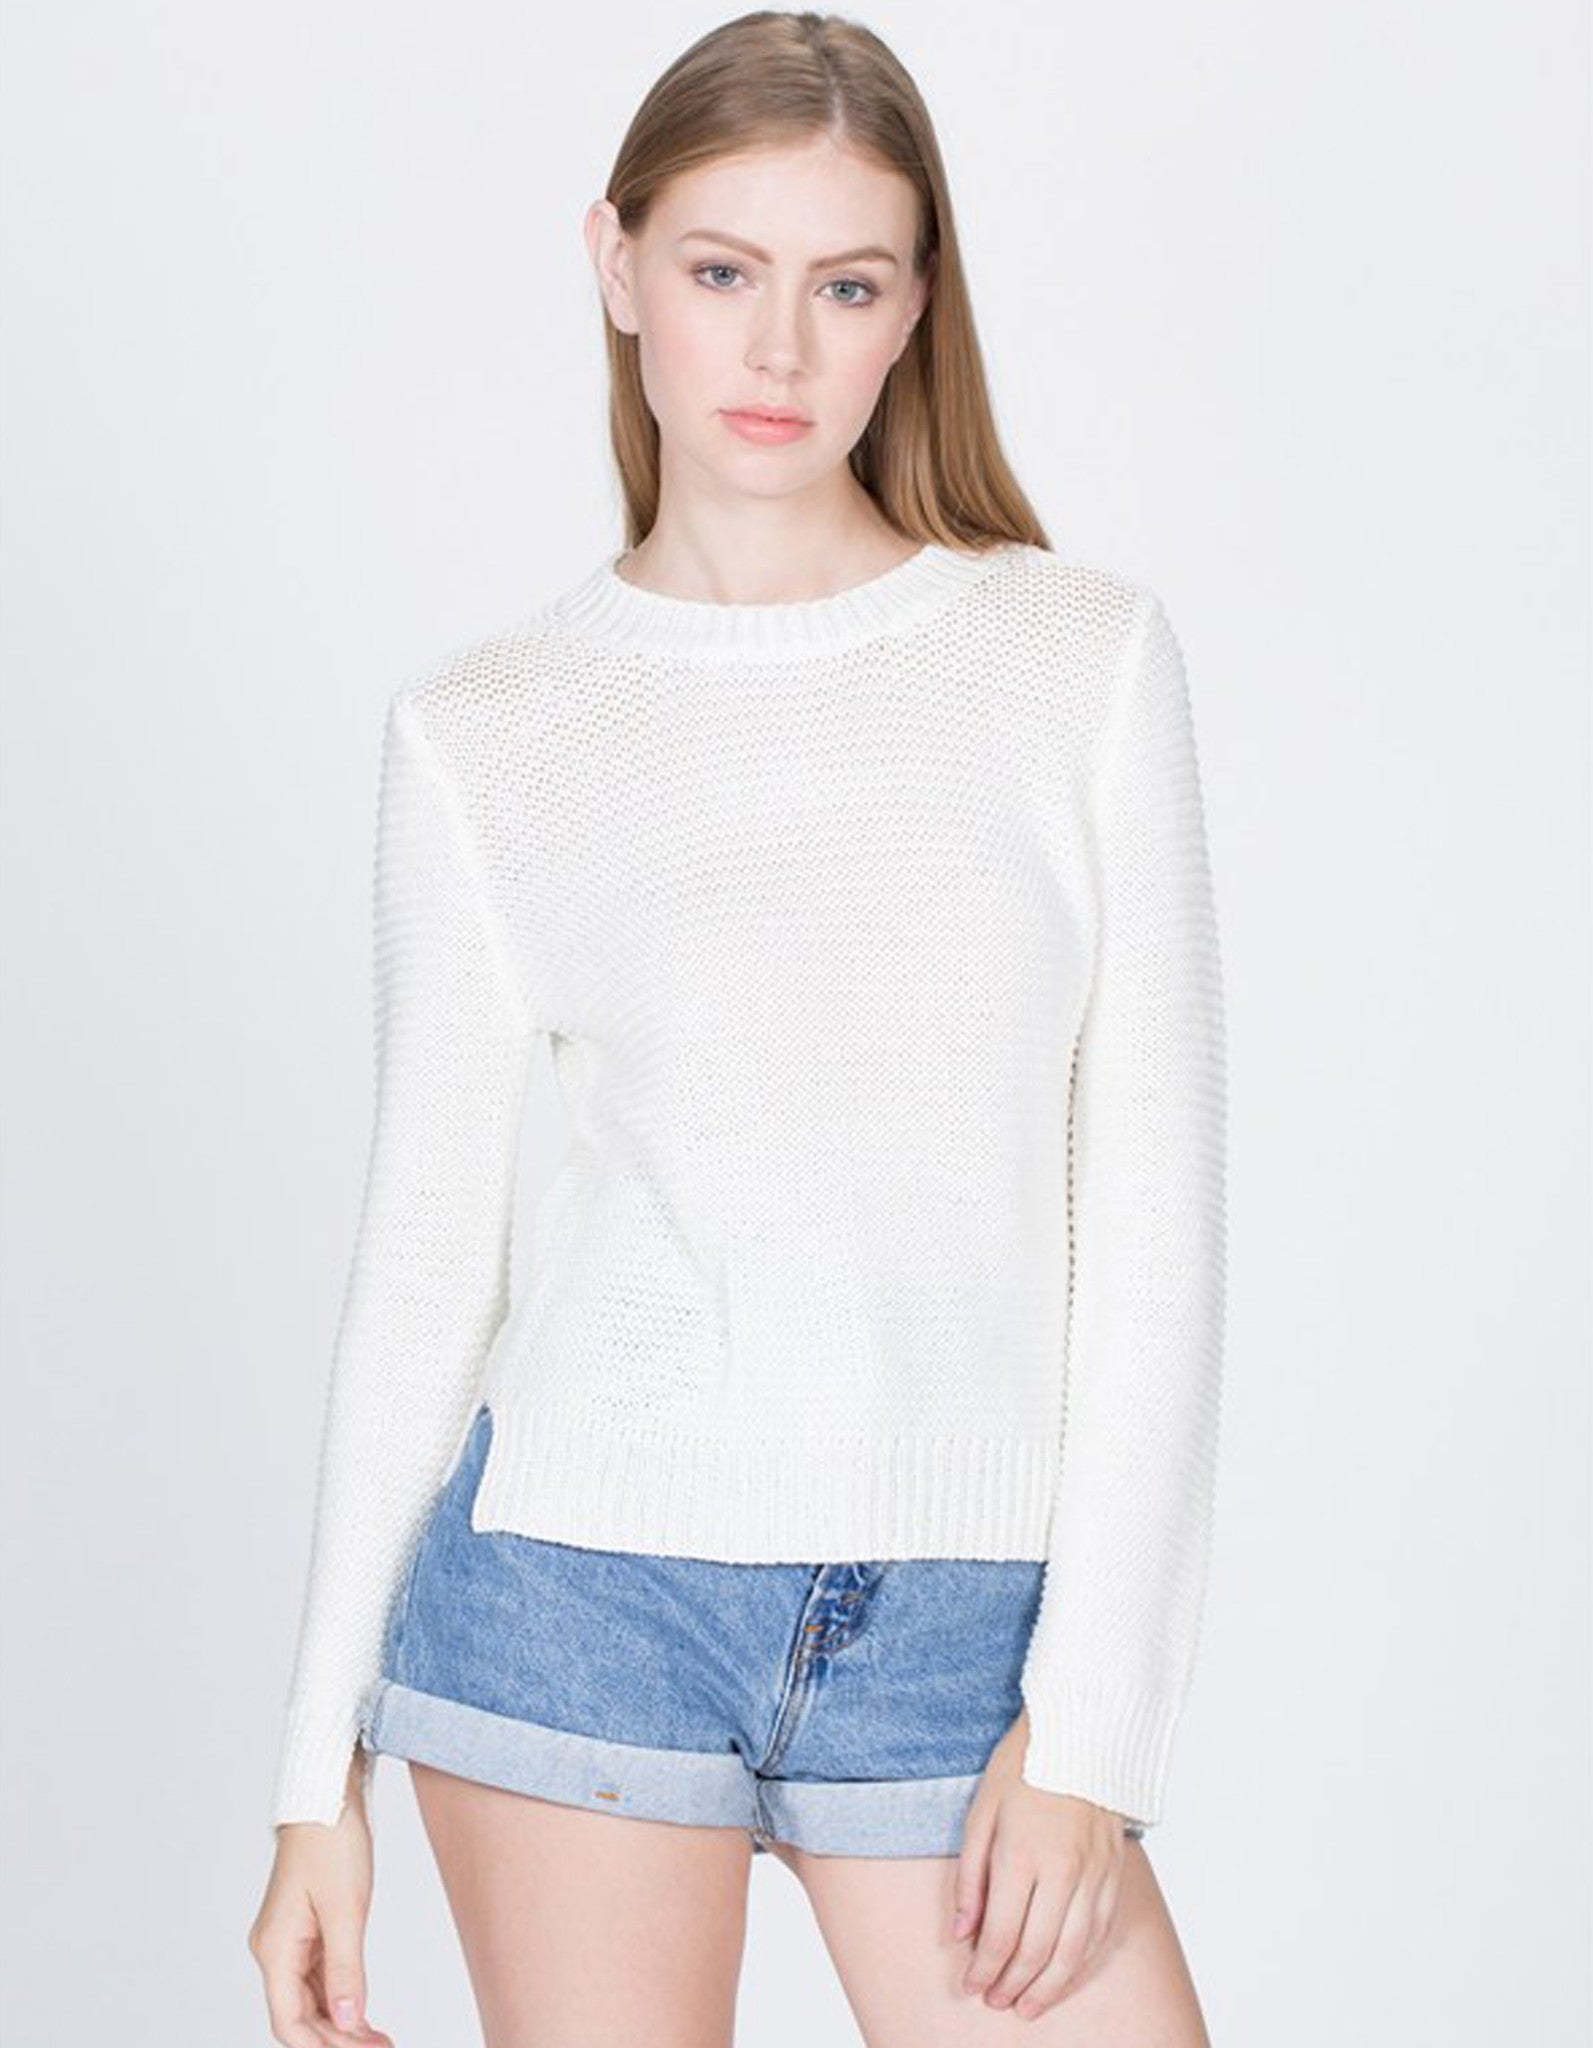 Clean Line Modern White Sweater